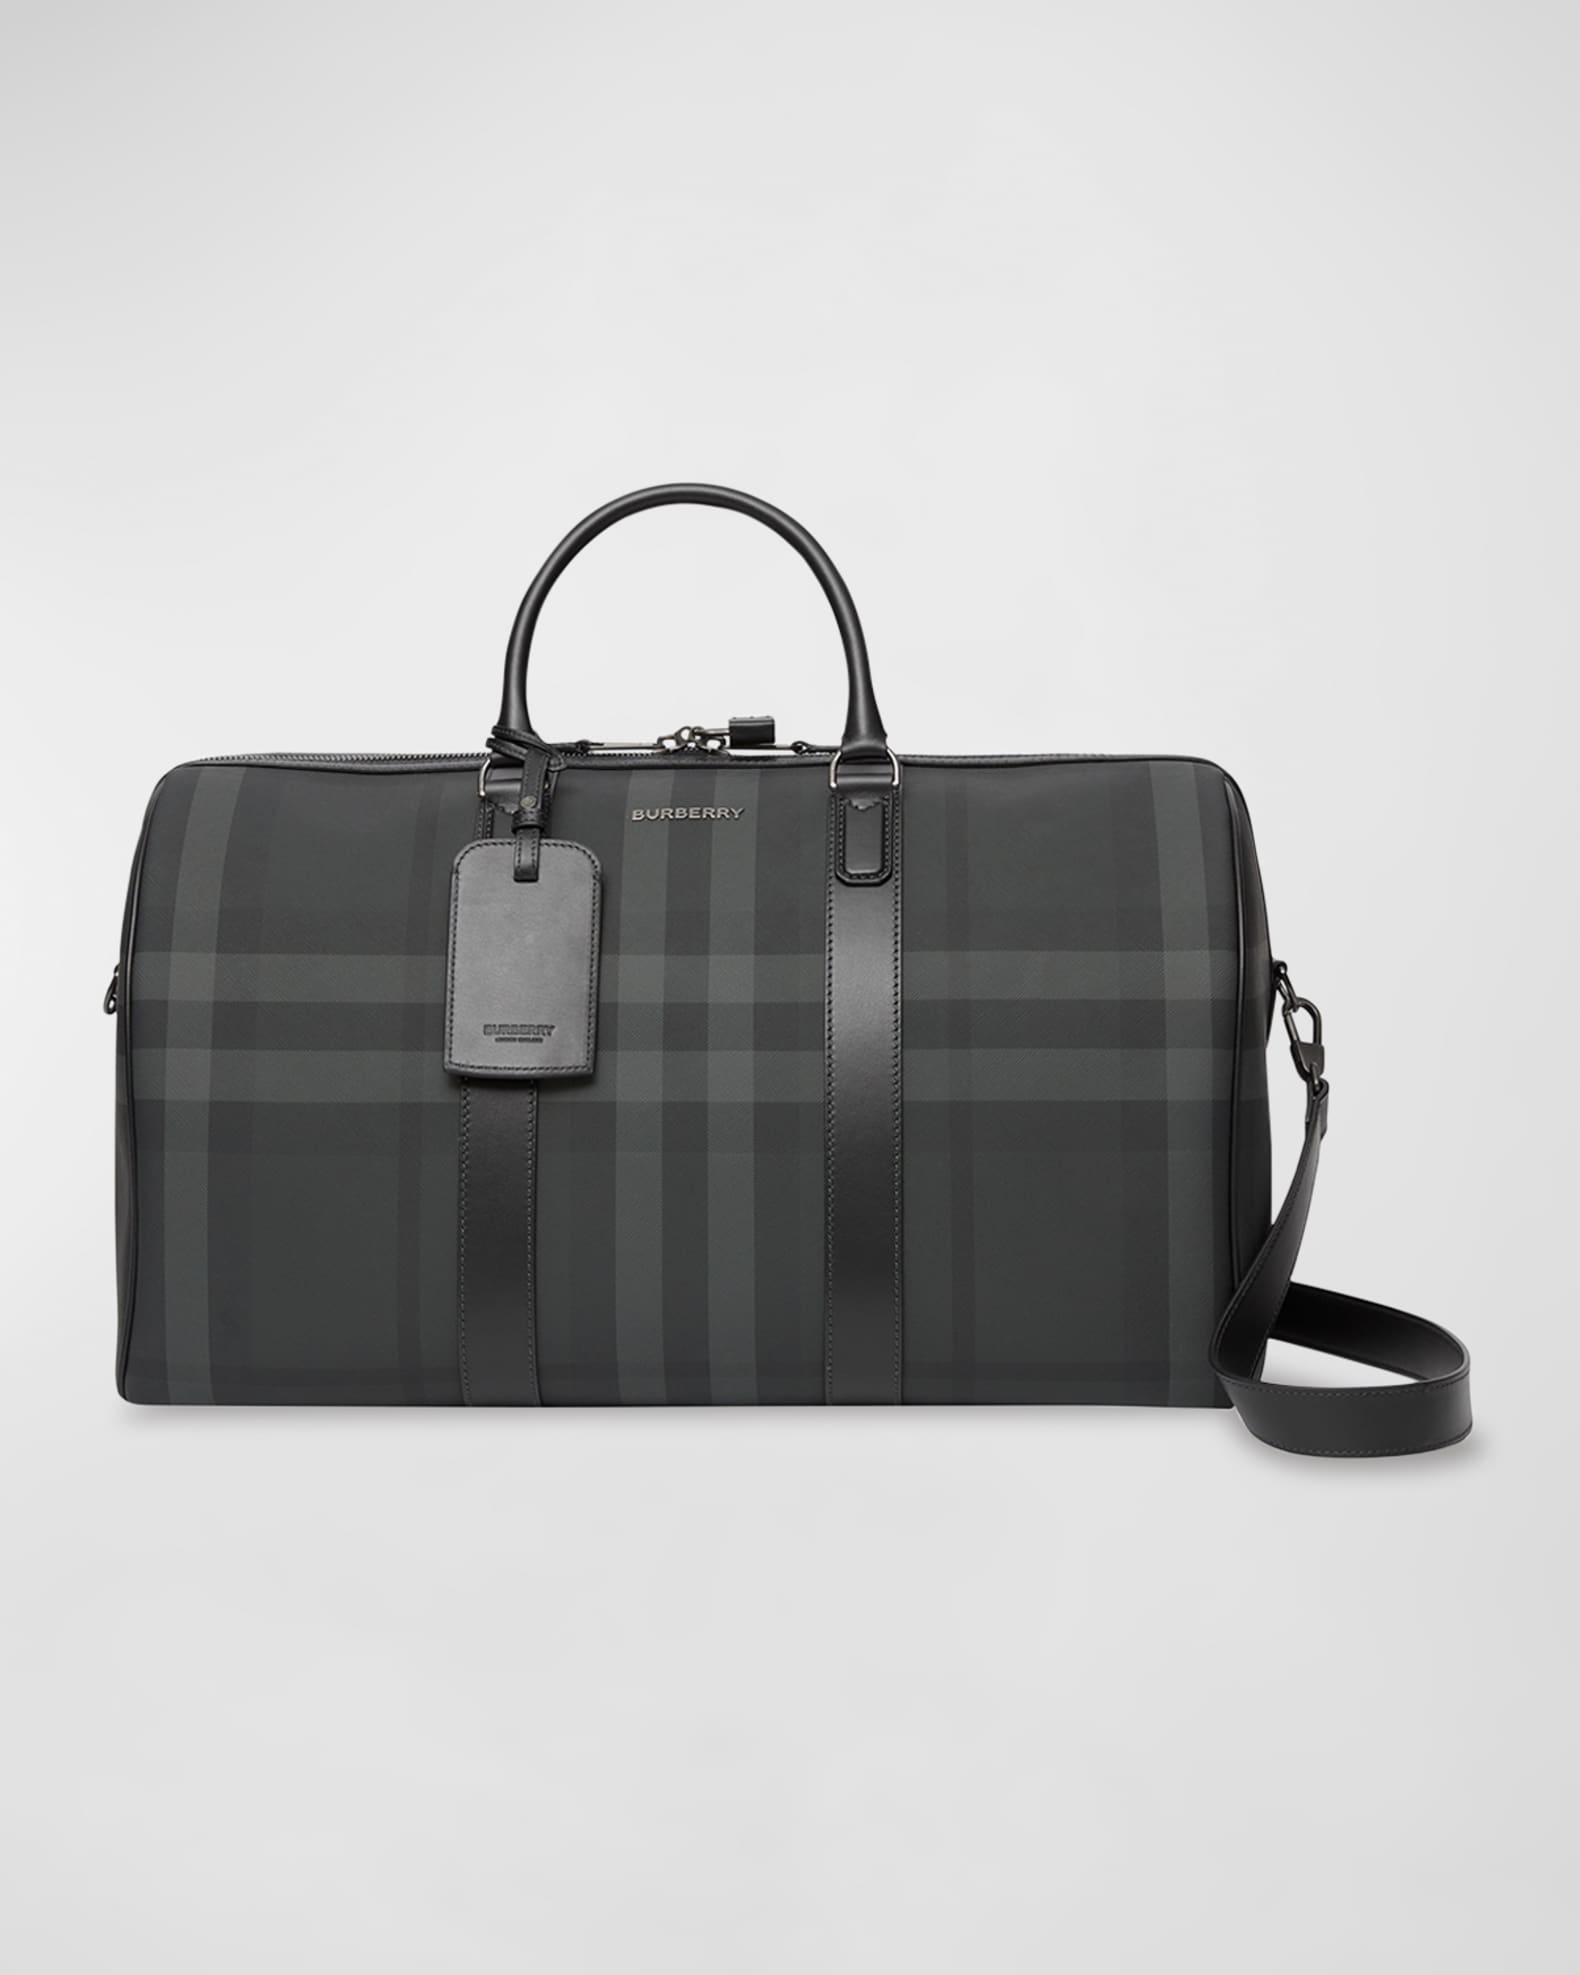 Burberry Men's Charcoal Check Holdall Duffel Bag | Neiman Marcus